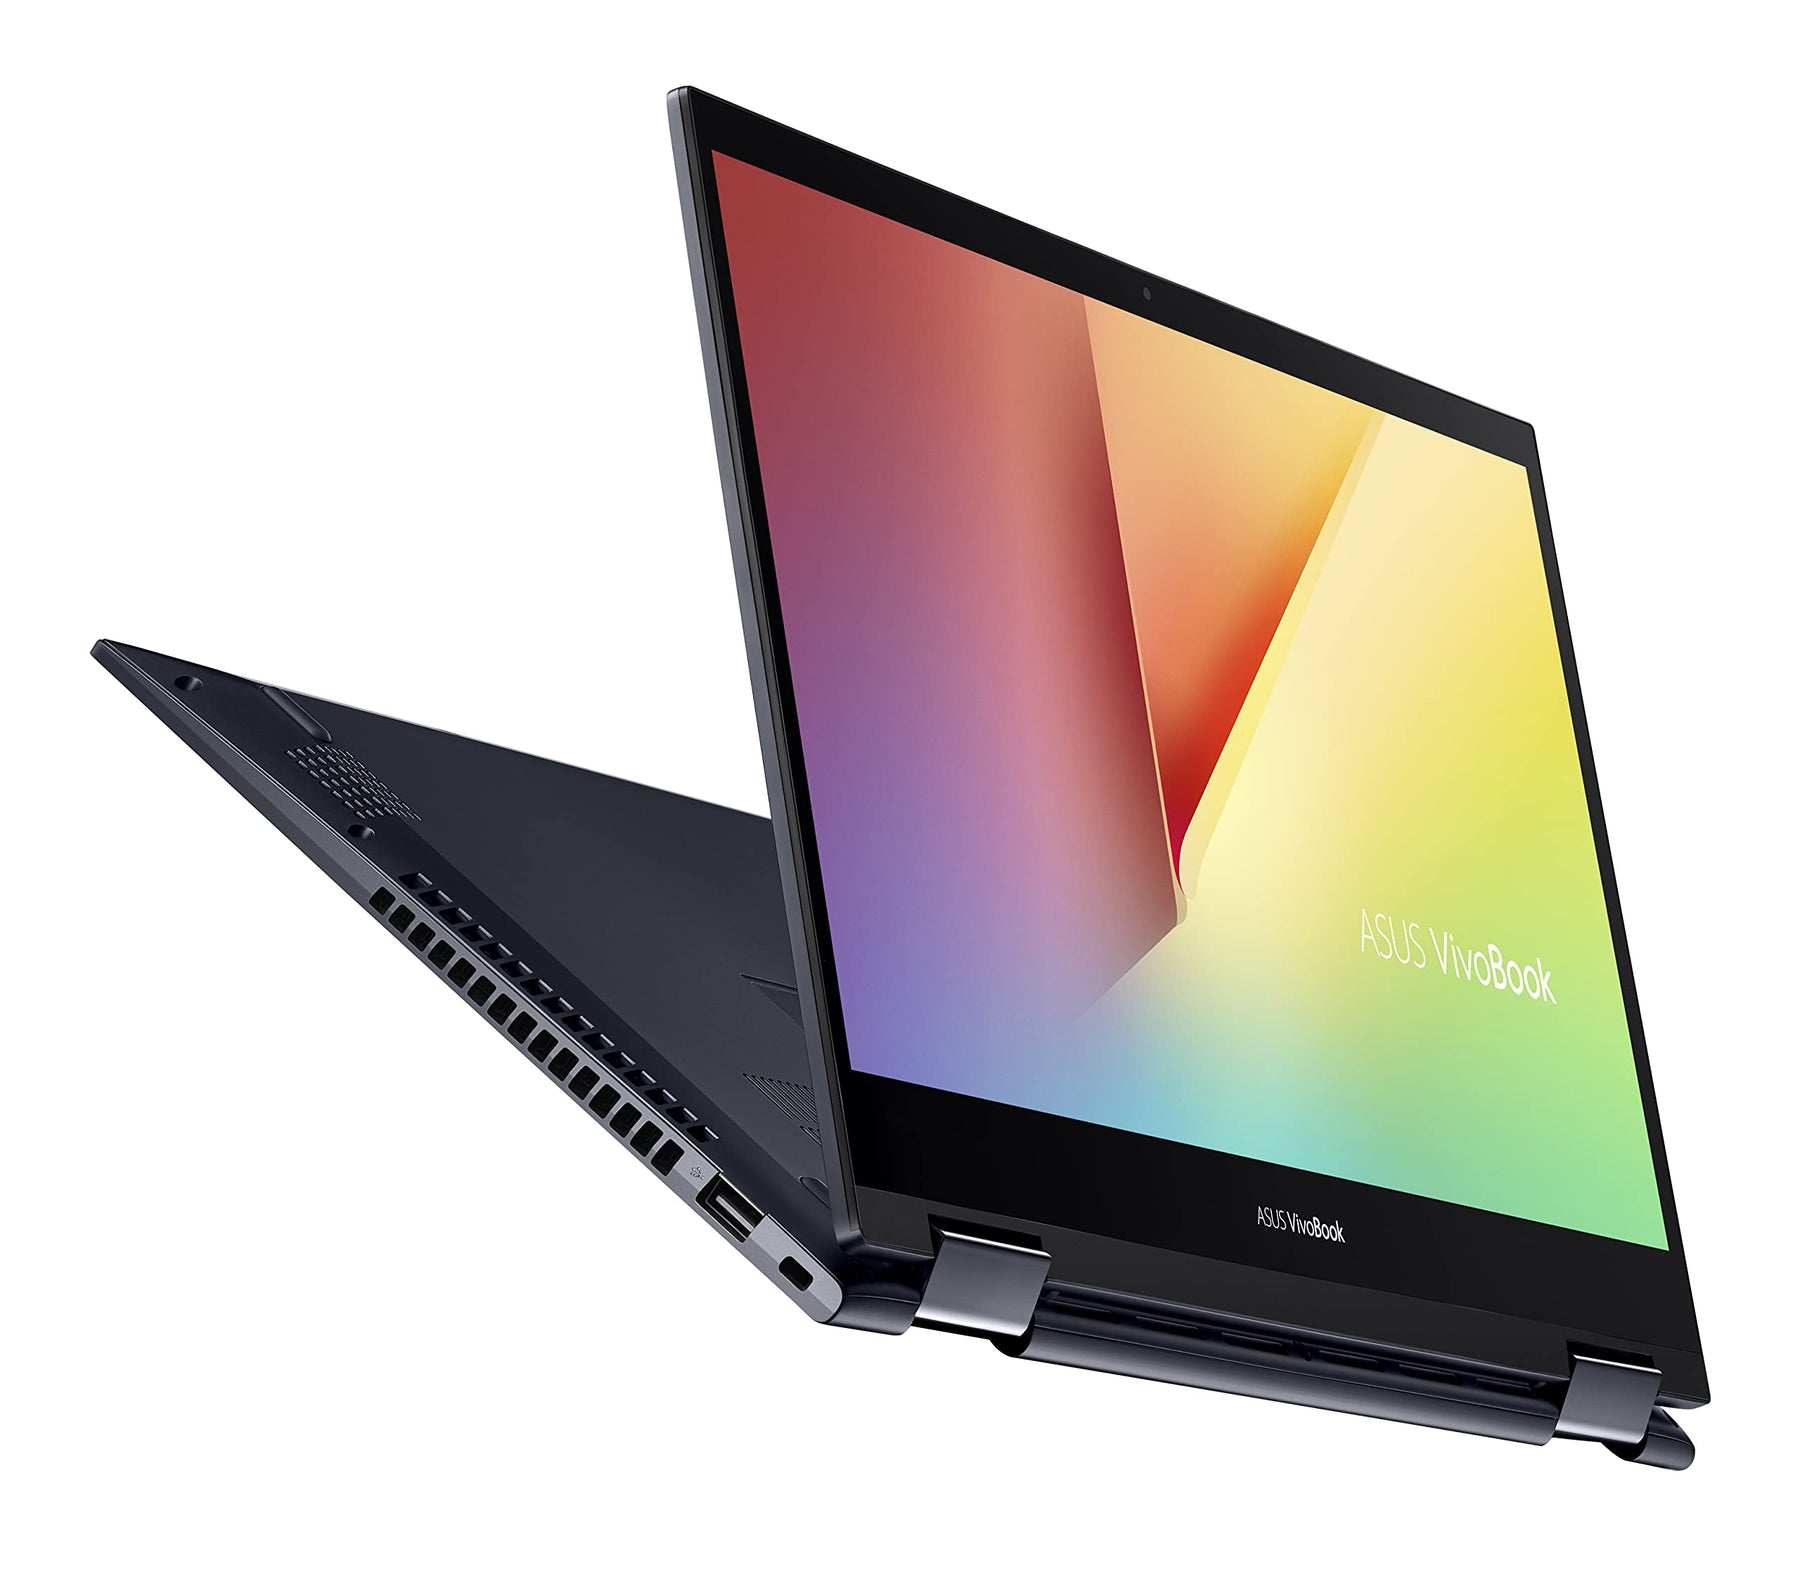 Asus VivioBook Flip 14" (TM420) Laptop AMD Ryzen 7 4700U 512GB 16GB RAM - Very Good Condition